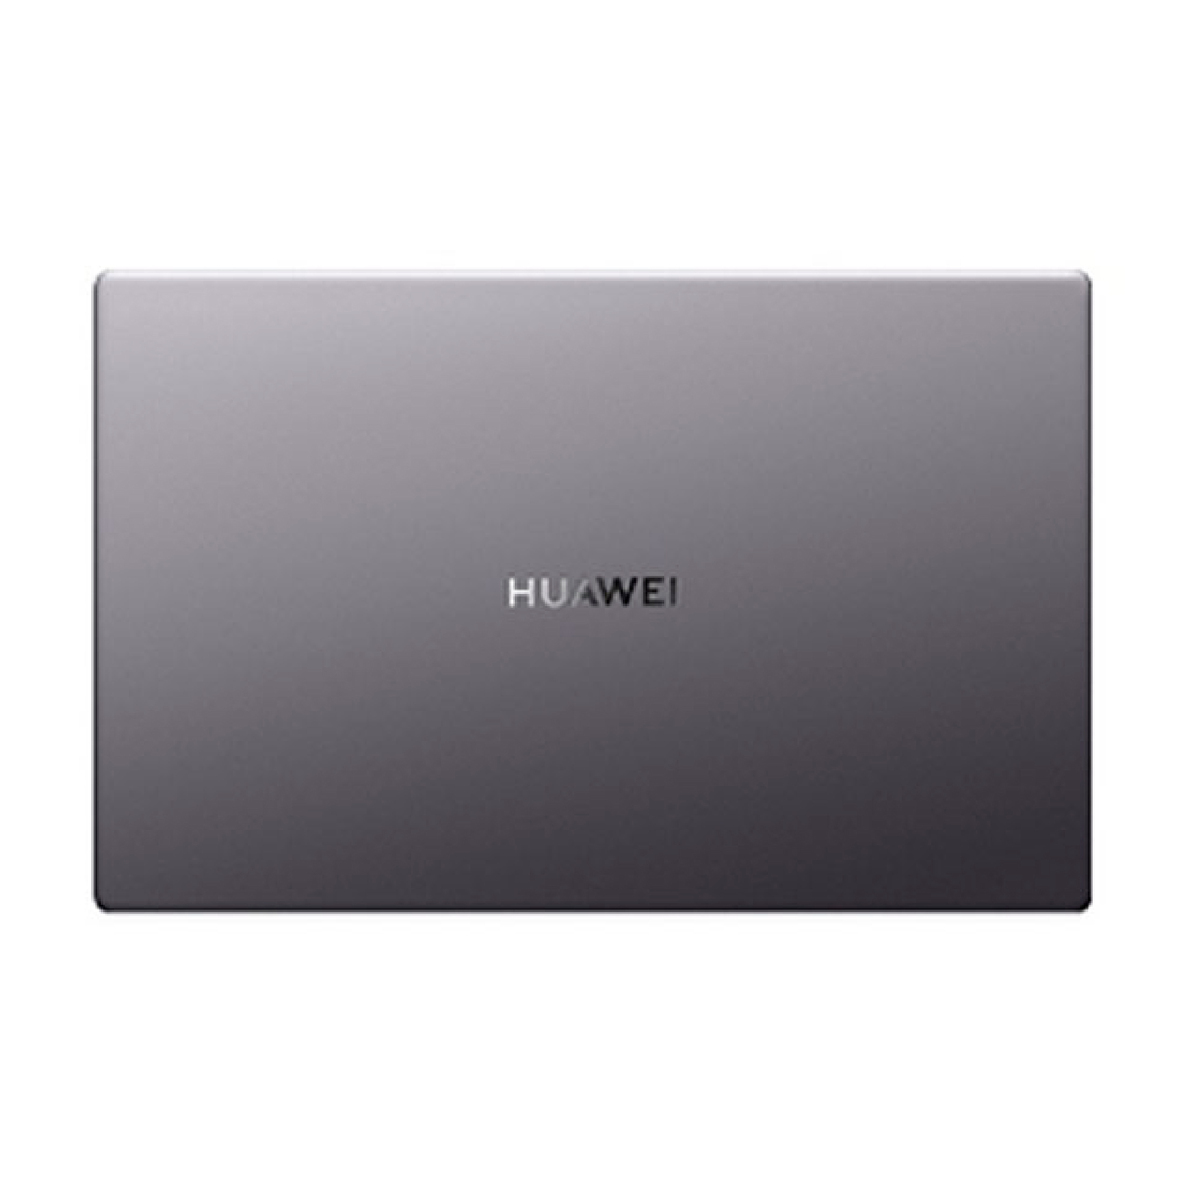 Huawei Matebook D15 2021 WAI9A,Intel Core I3,8GB RAM,256GB SSD,Intel UHD Graphics,15.6" FHD,Windows 10